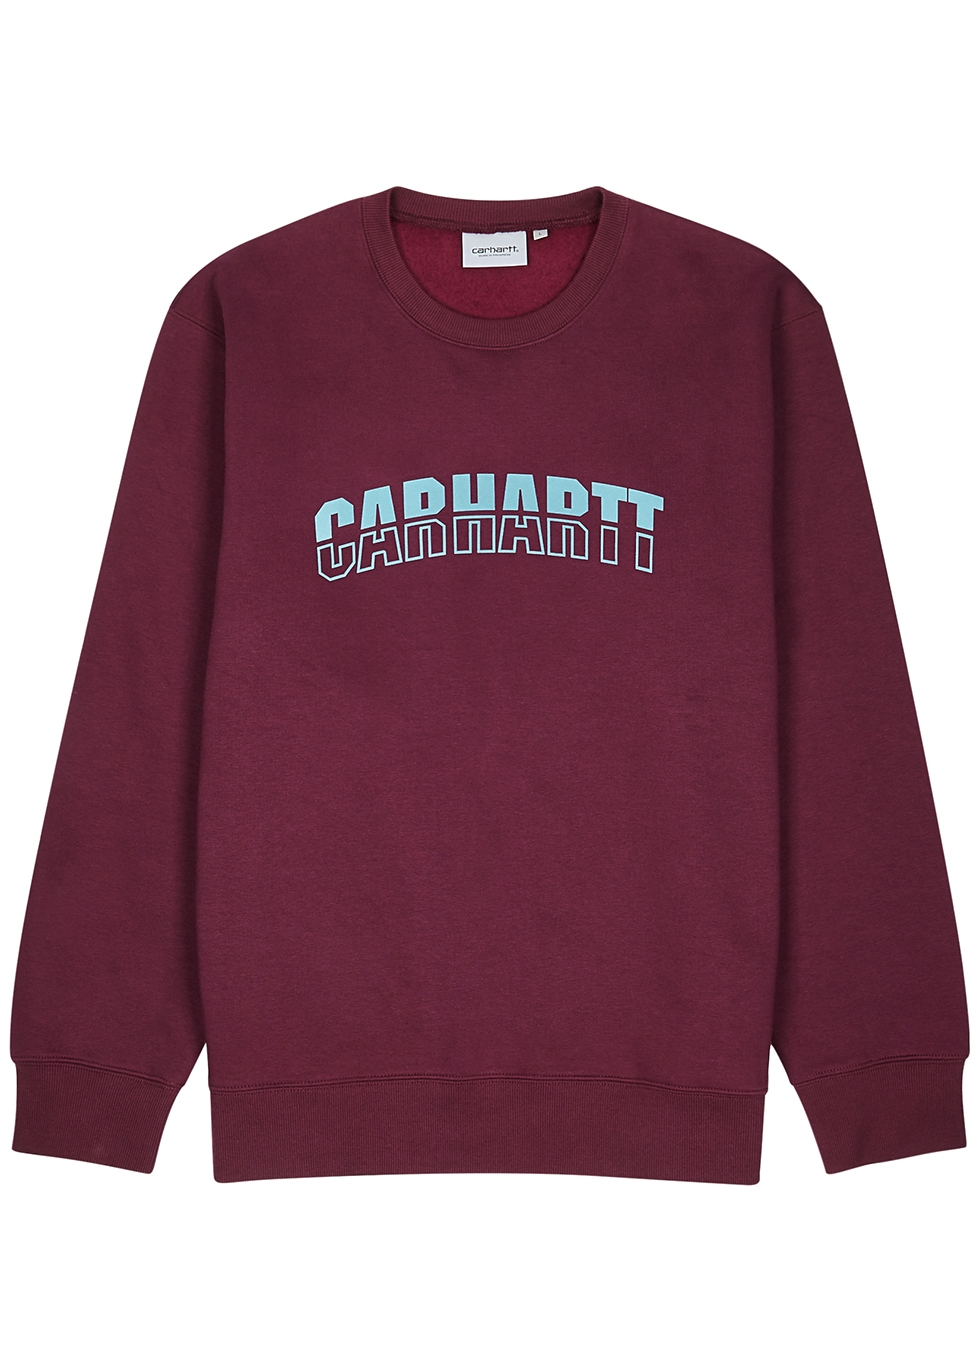 burgundy carhartt sweatshirt